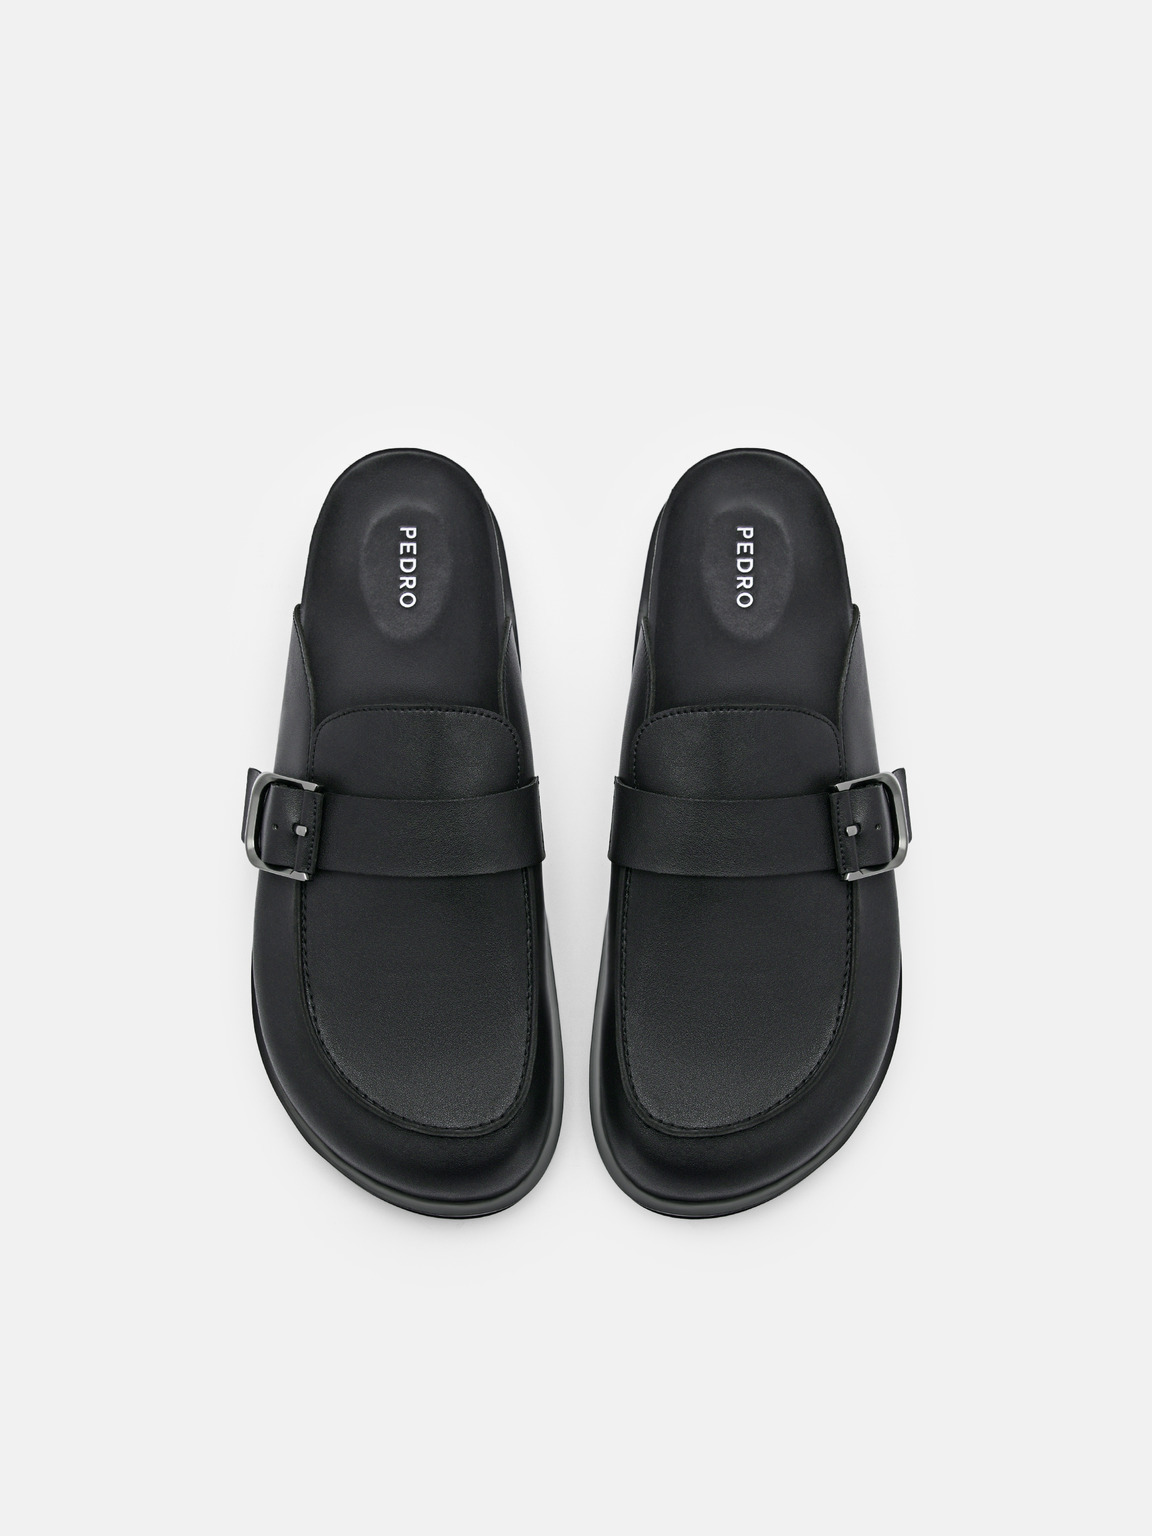 Men's Helix Slip-On Sandals, Black